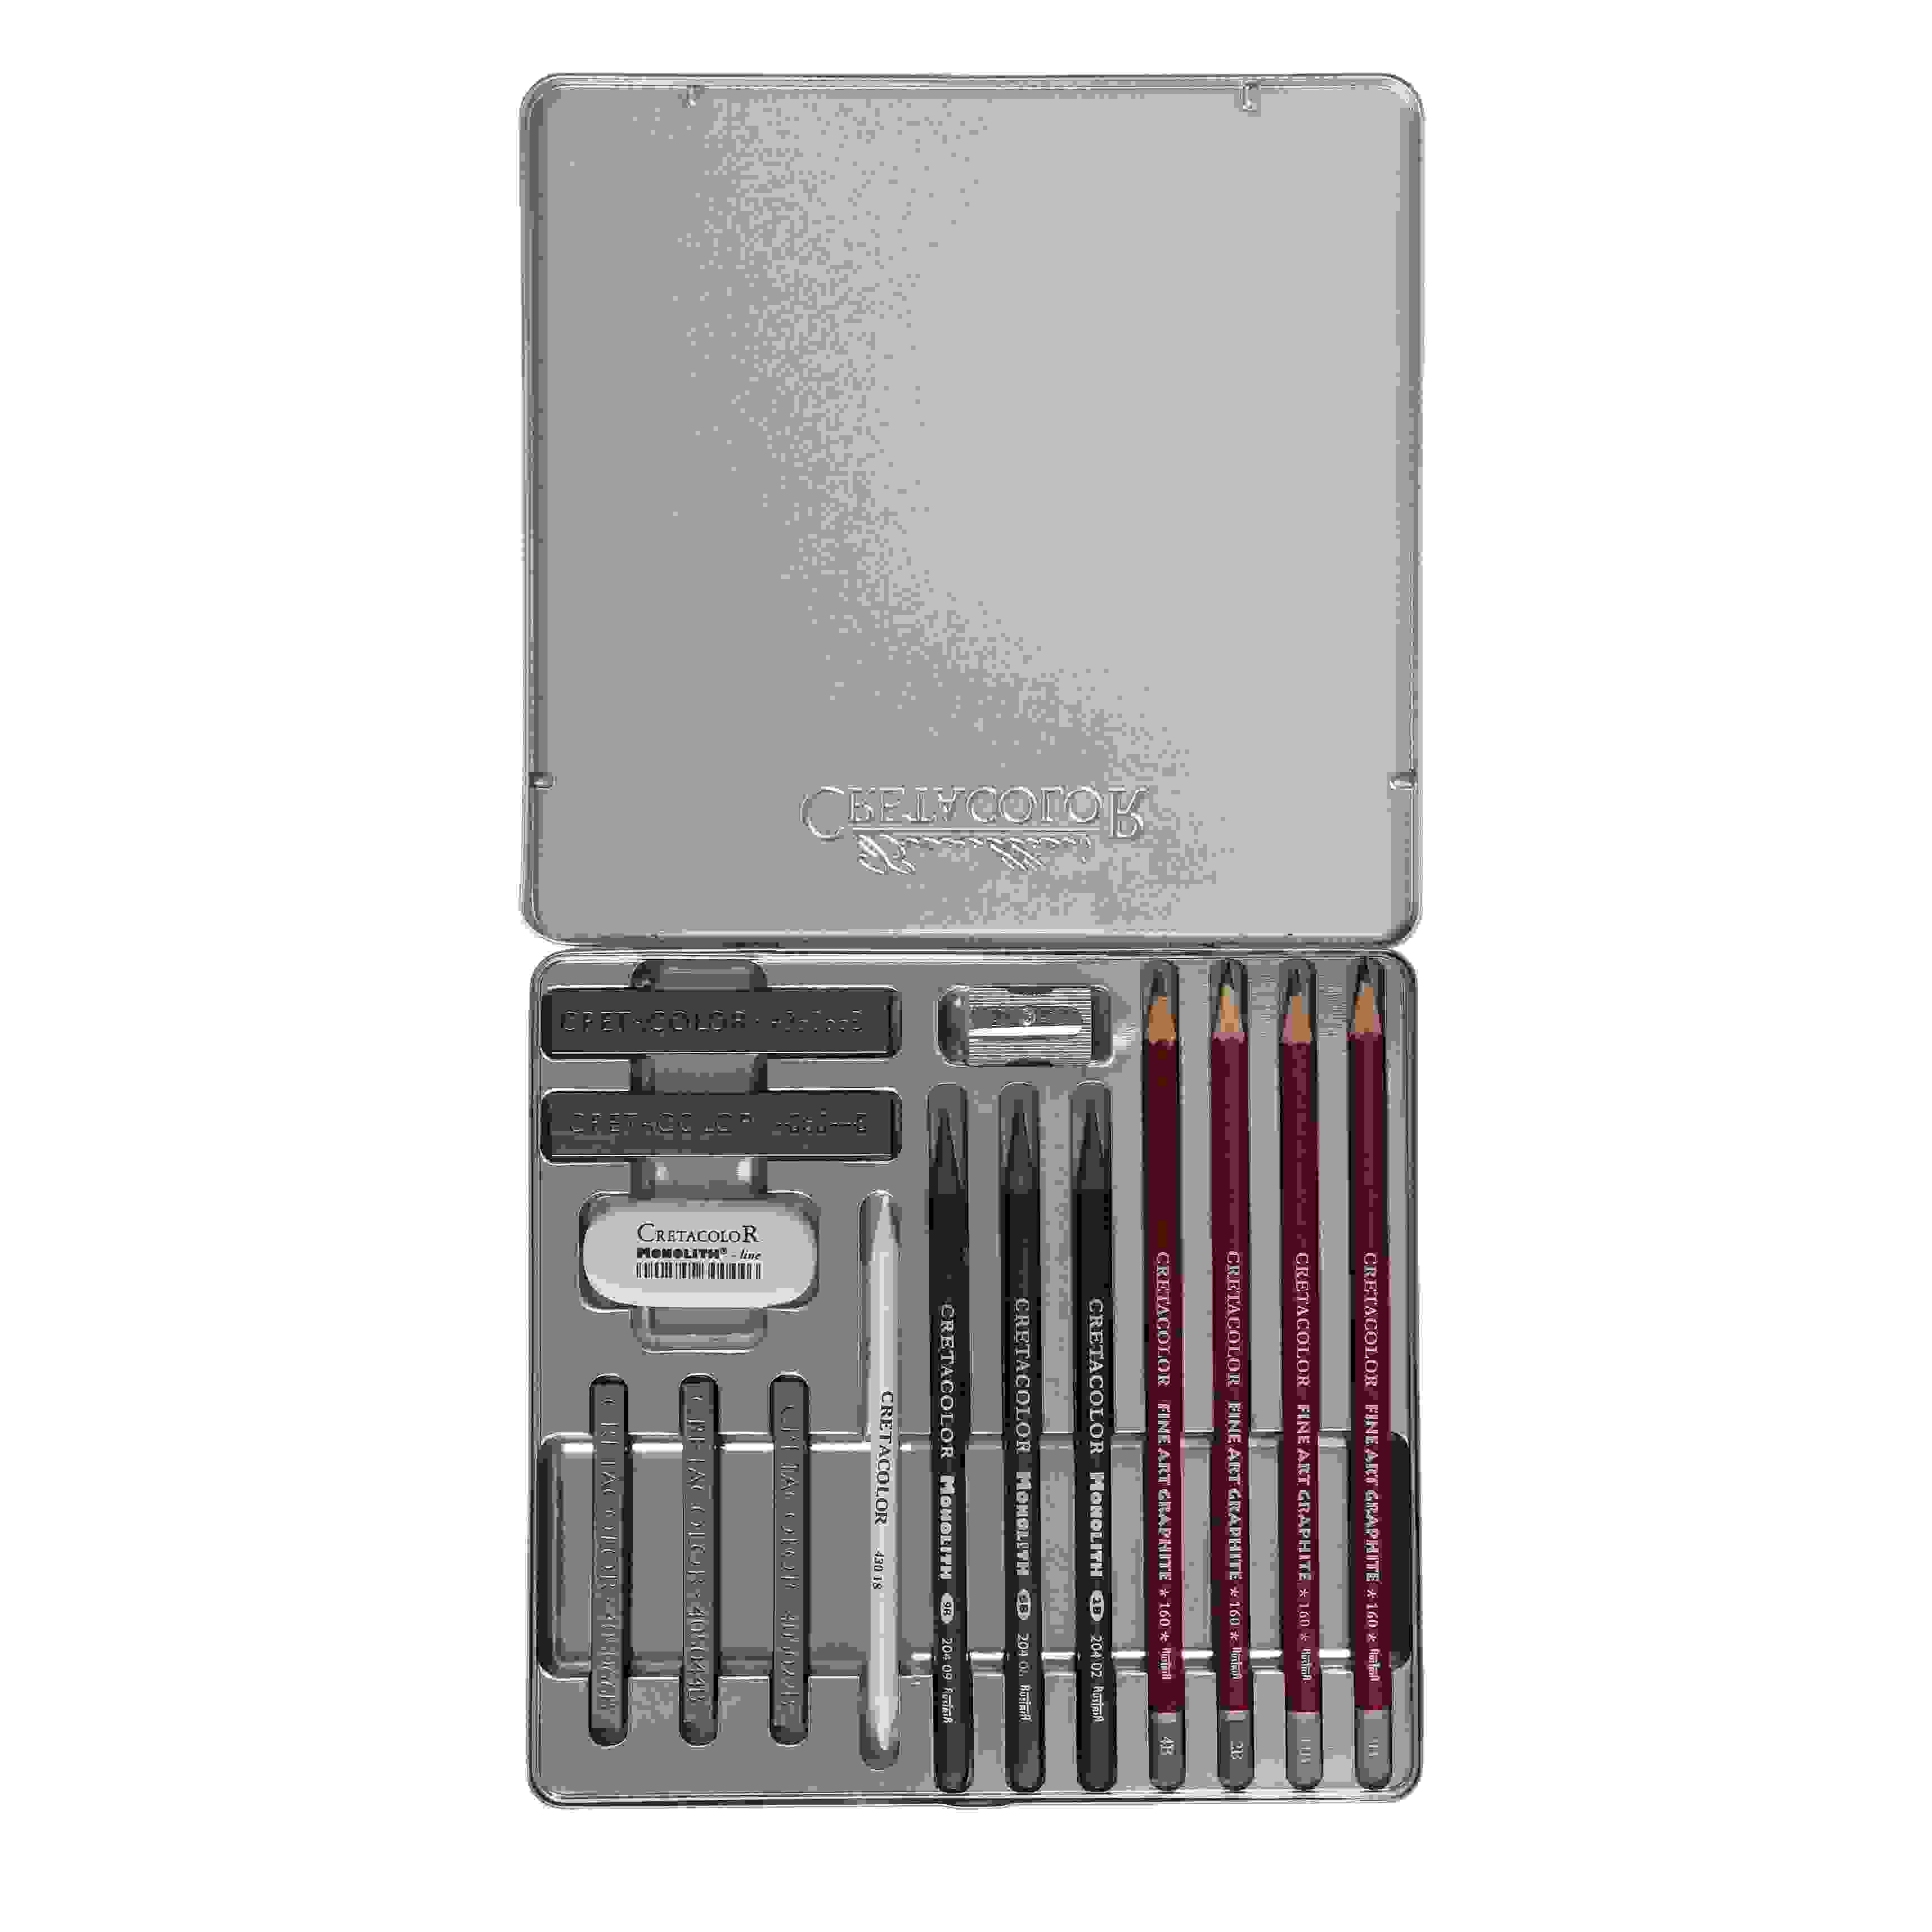 Cretacolor Silver Box Graphite Drawing Set Of 15